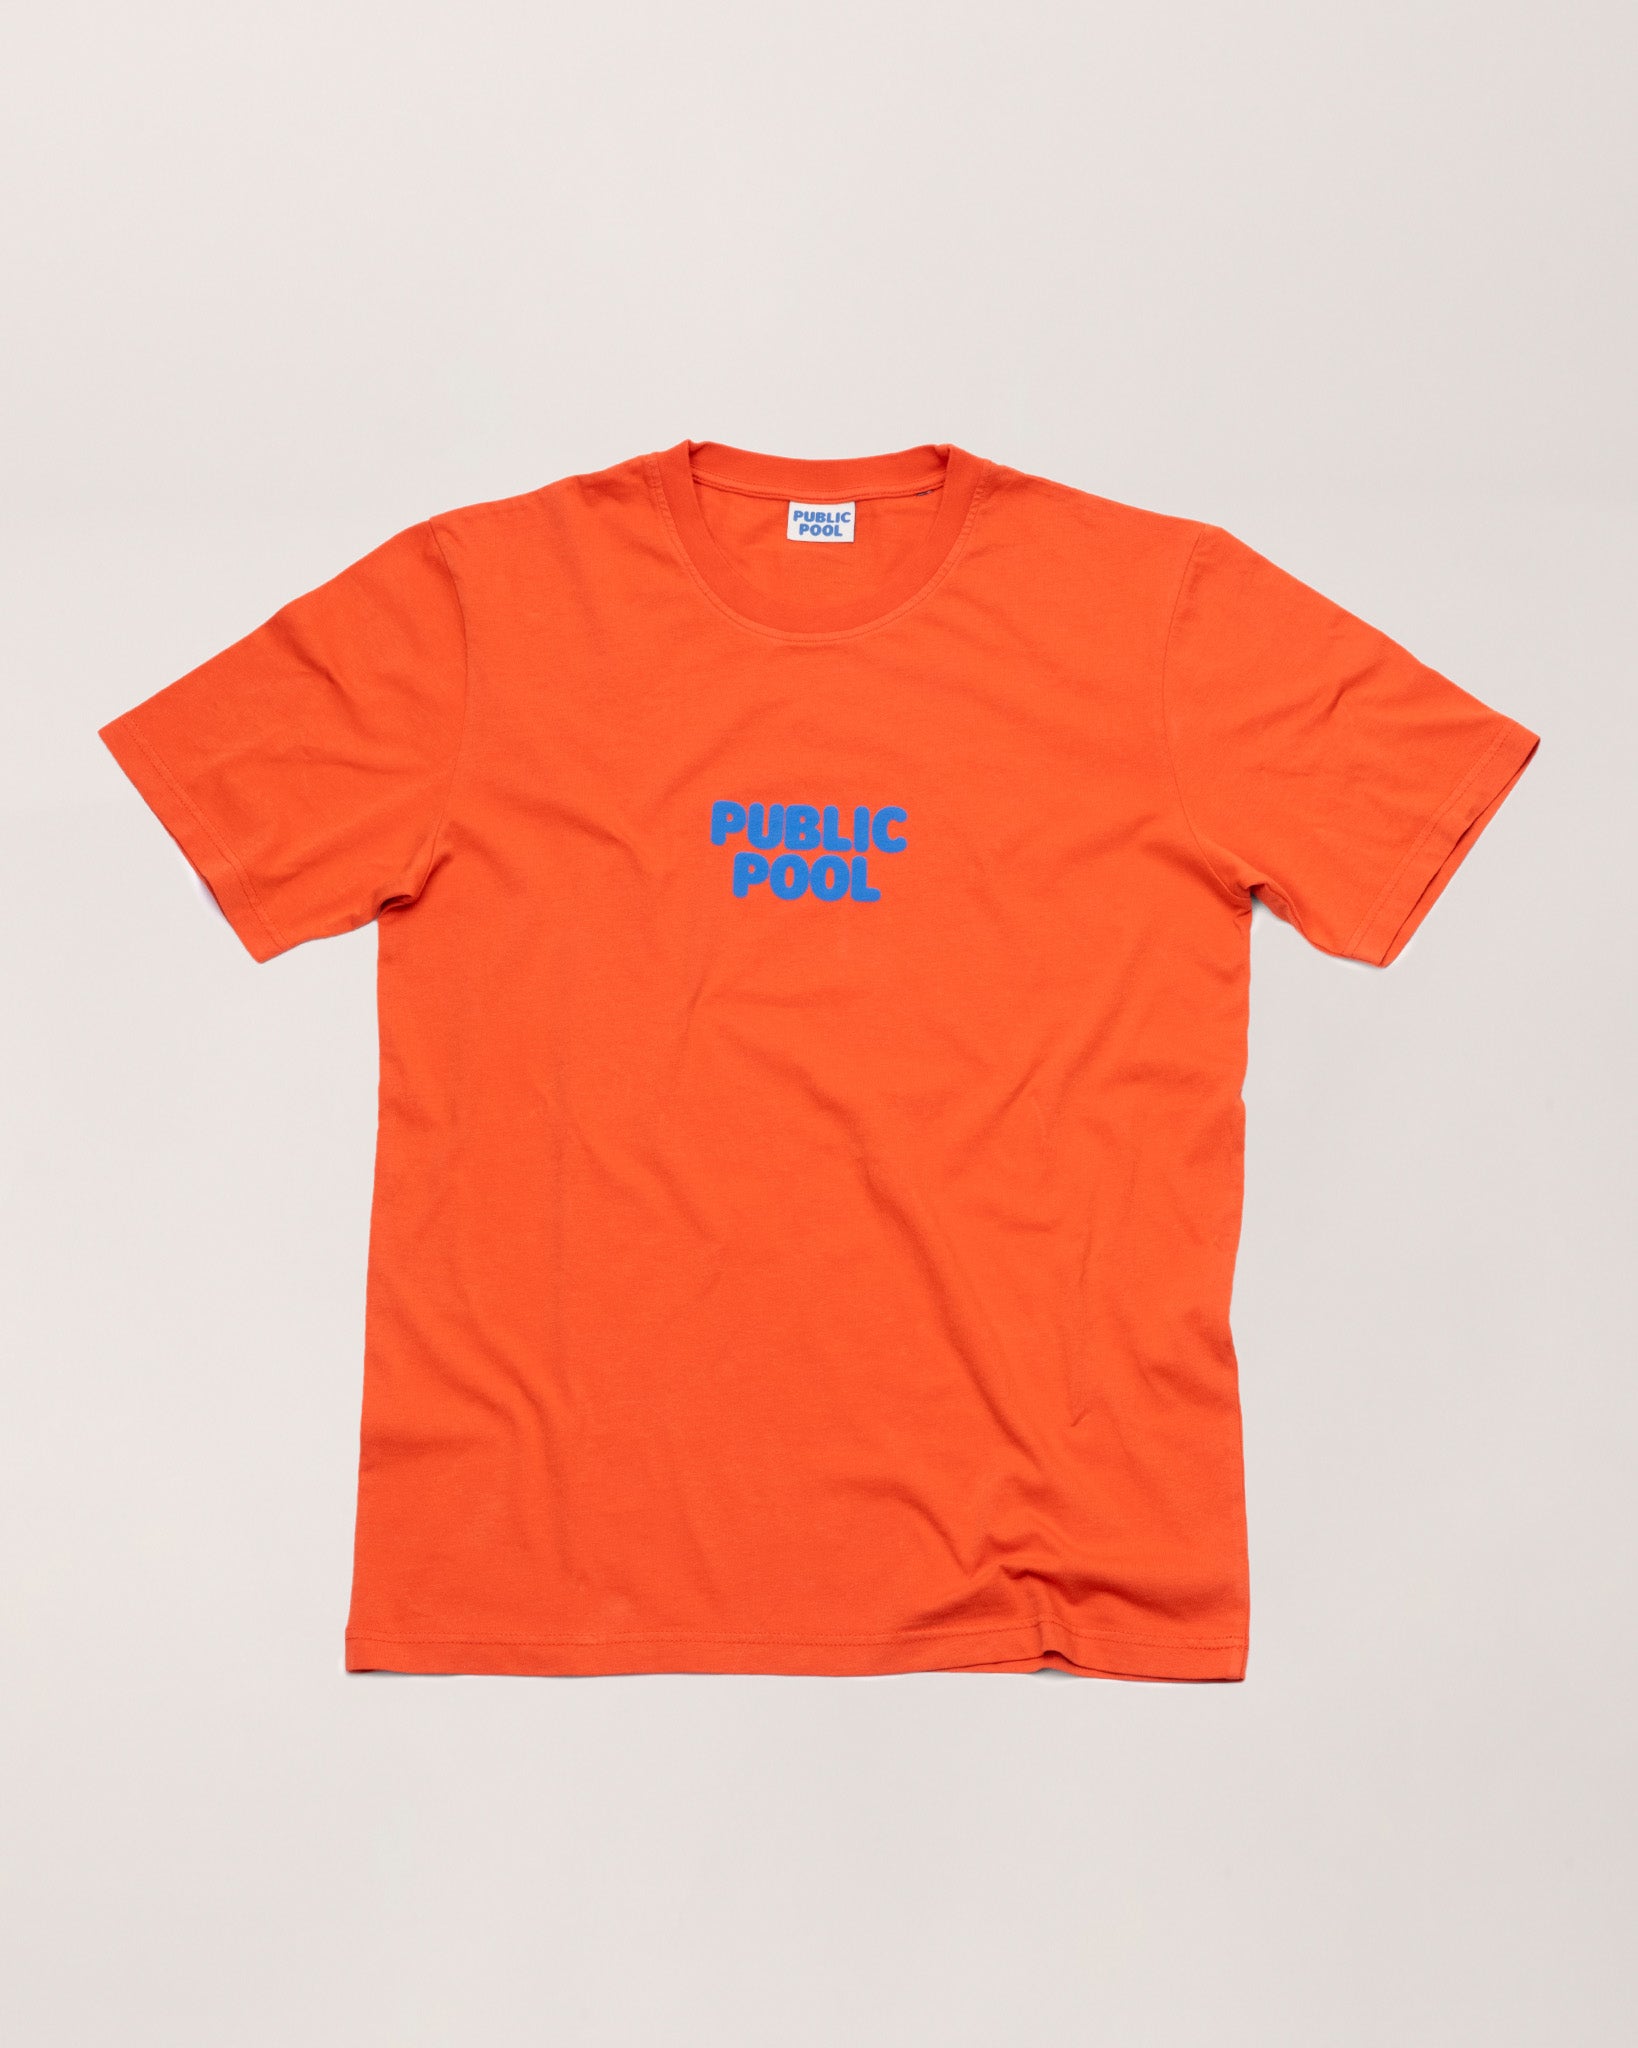 An orange tee shirt with a blue Public Pool logo. 